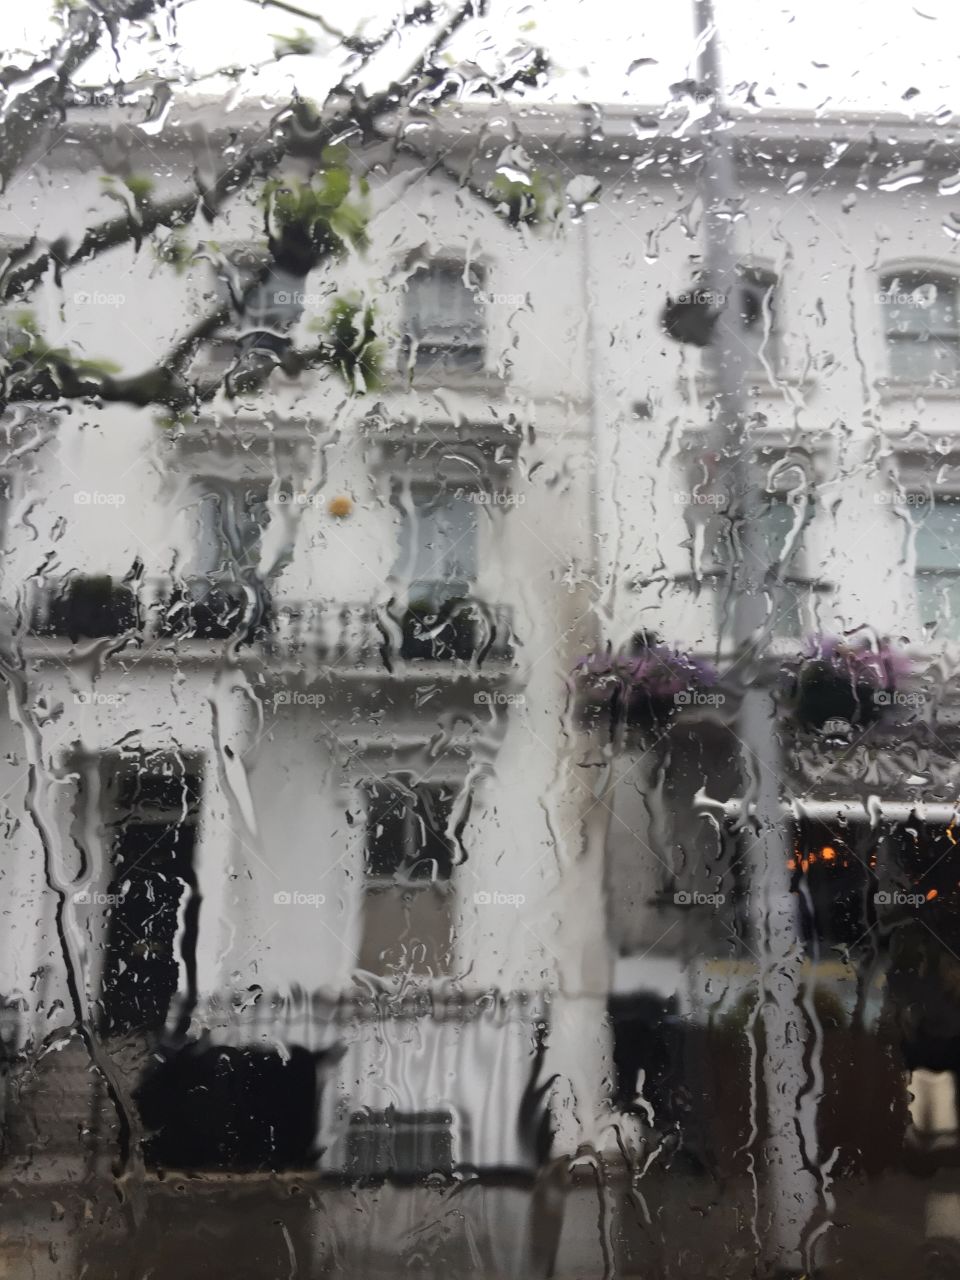 Rainy day in London